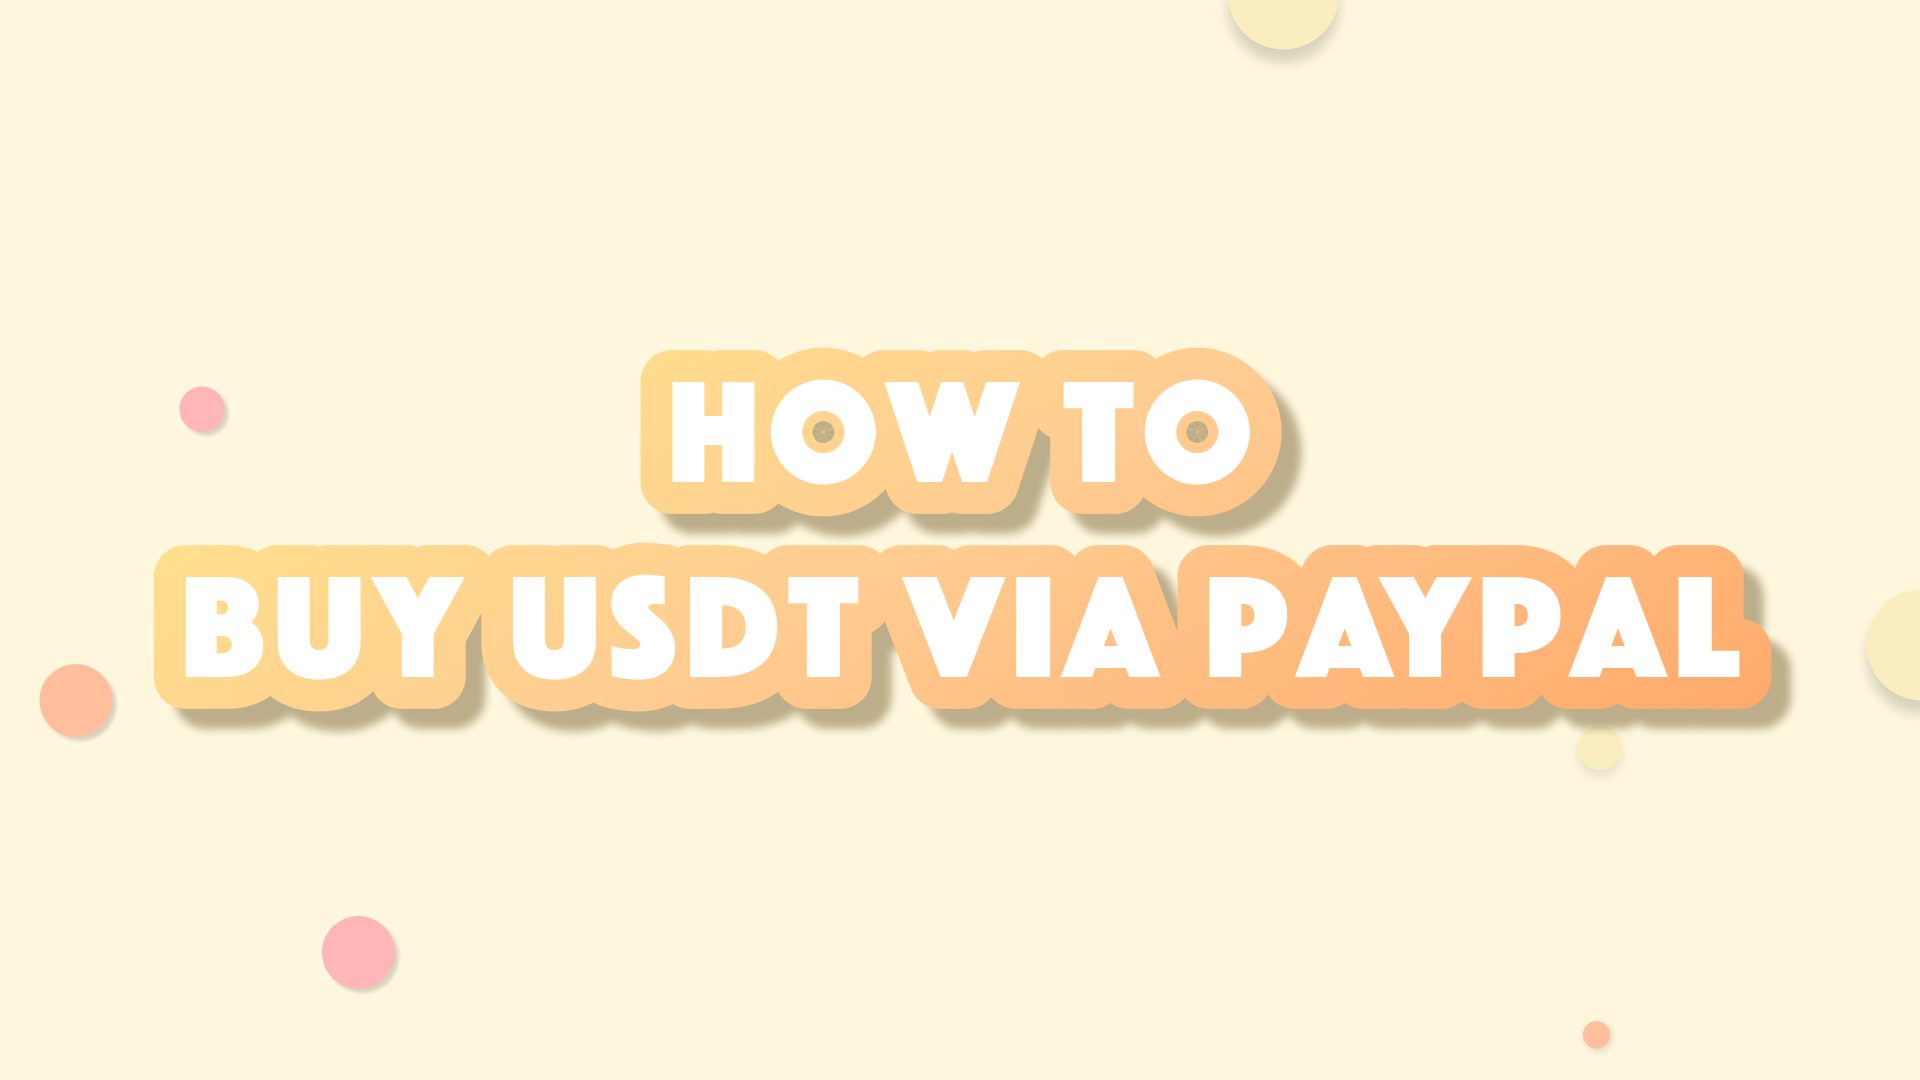 How to buy USDT via PayPal